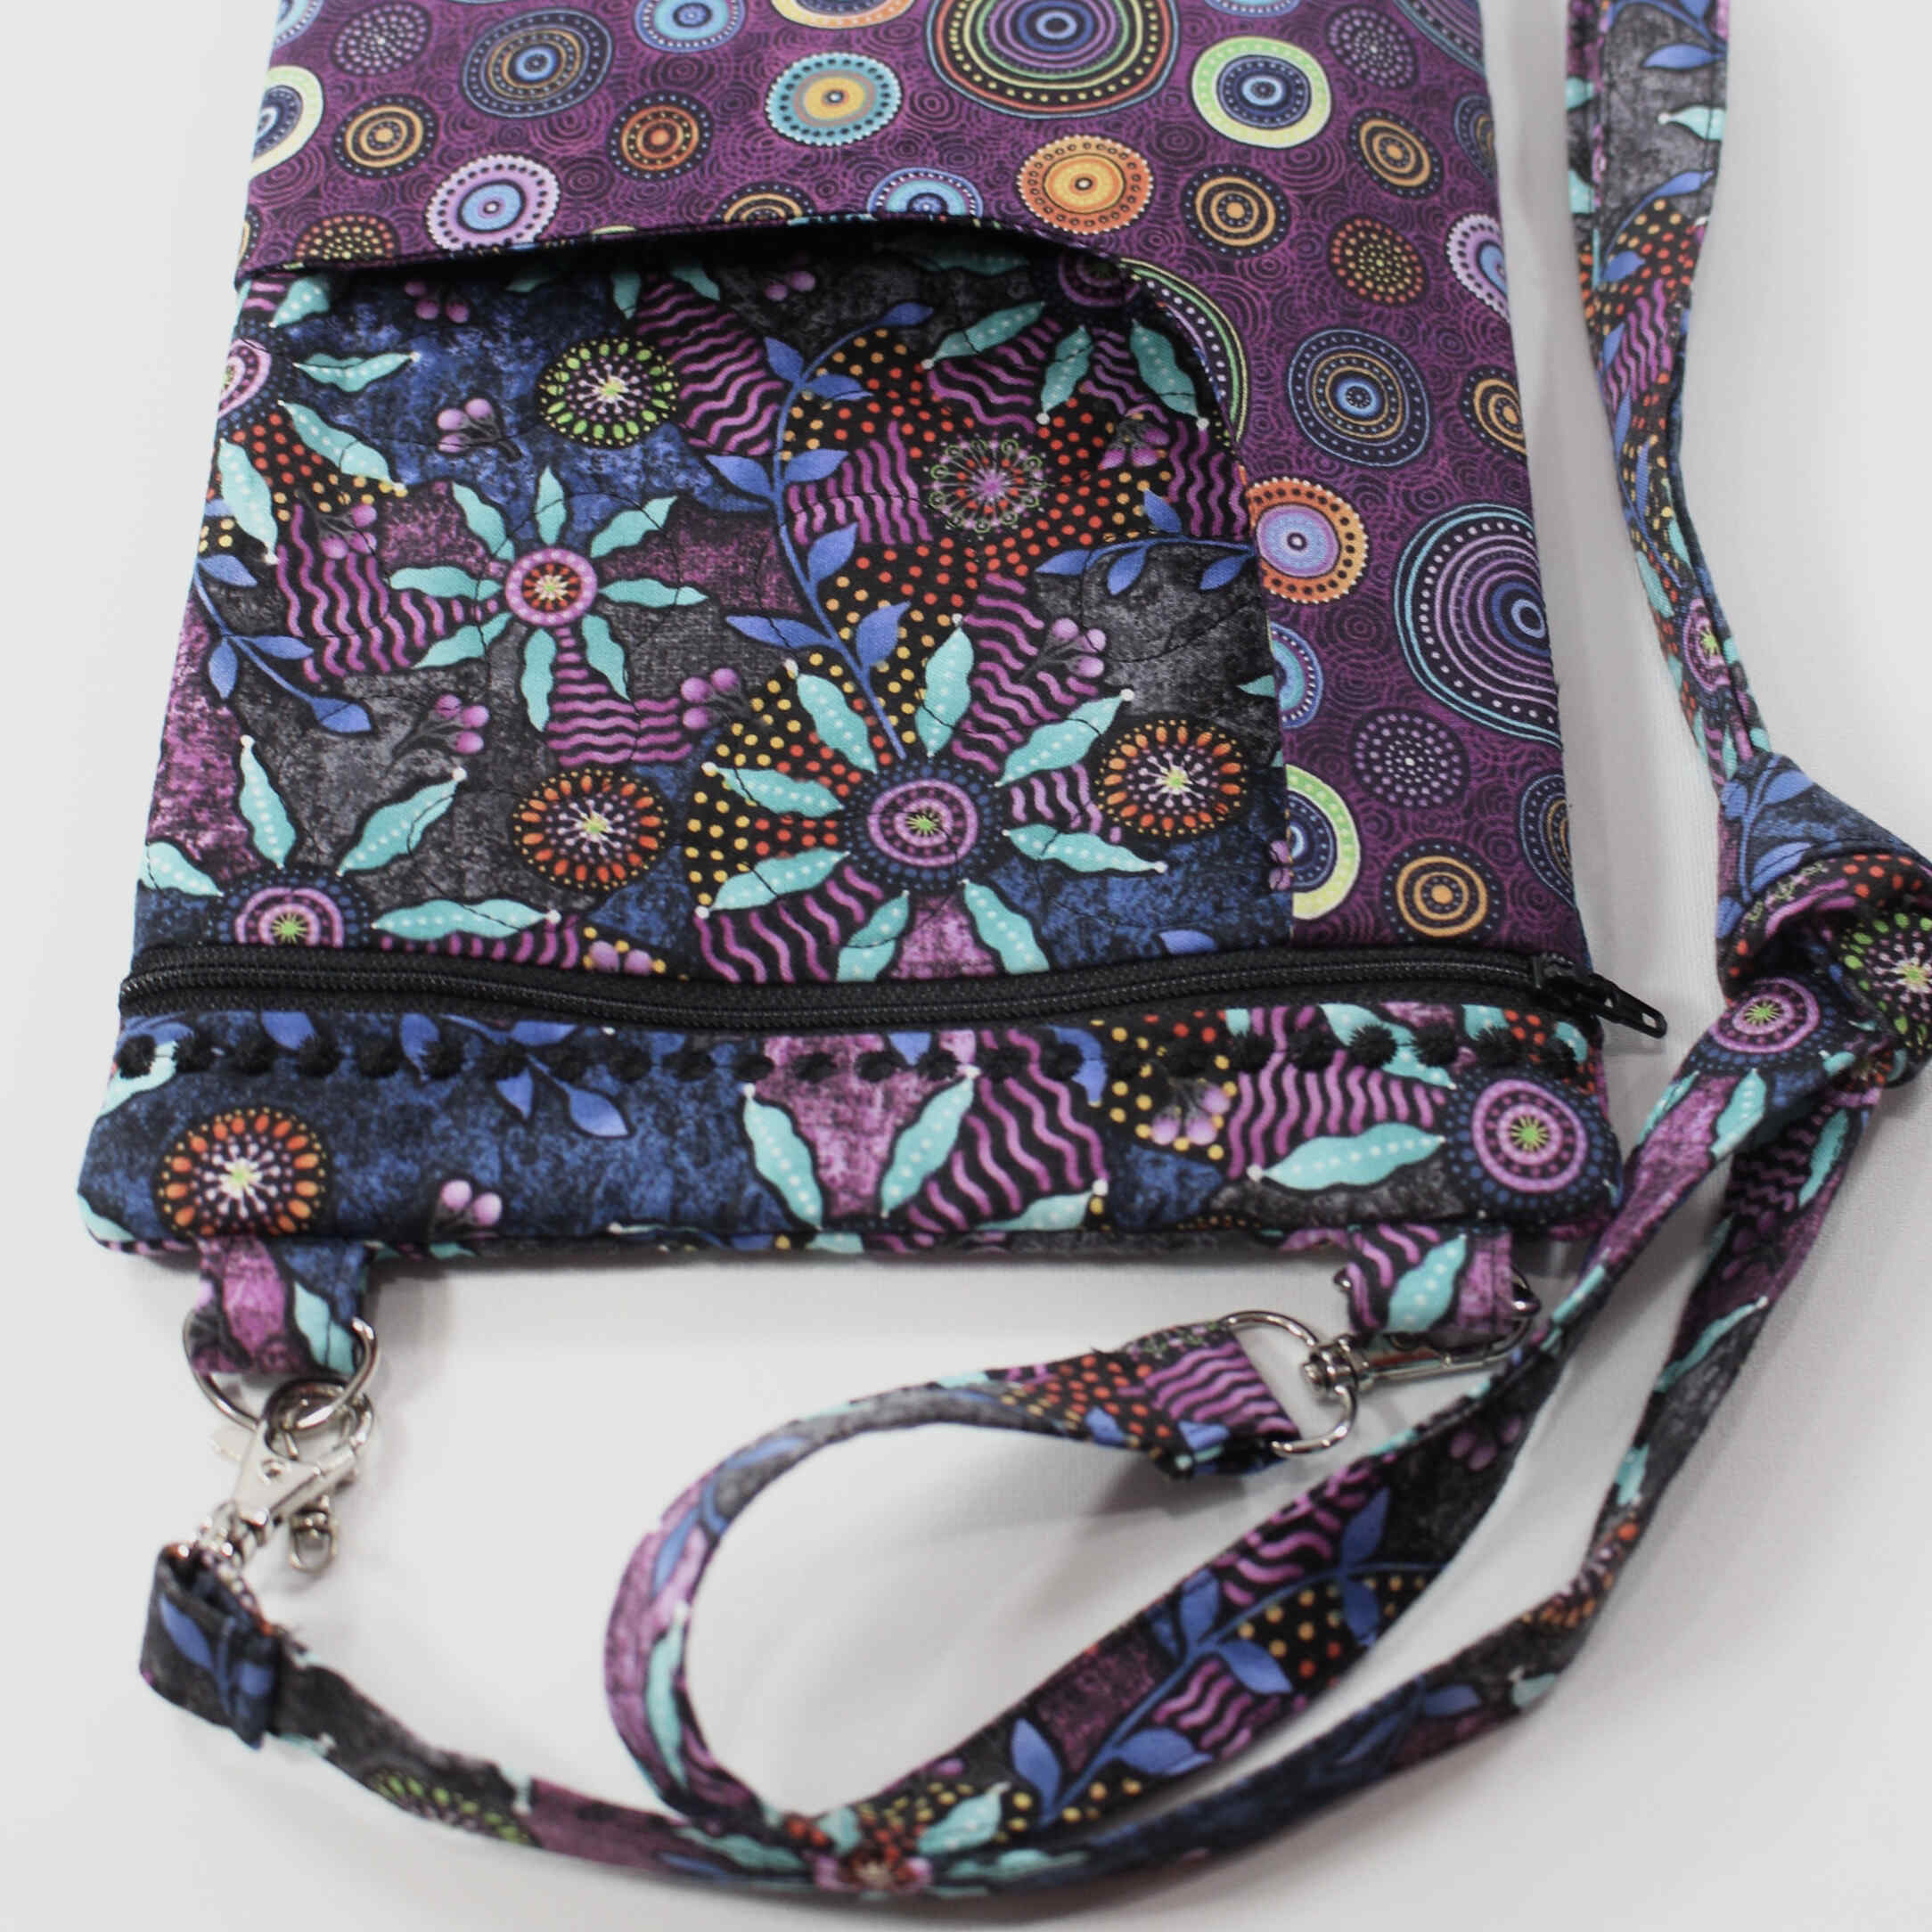 Handmade Bags - "Spirals and Stars Purse"